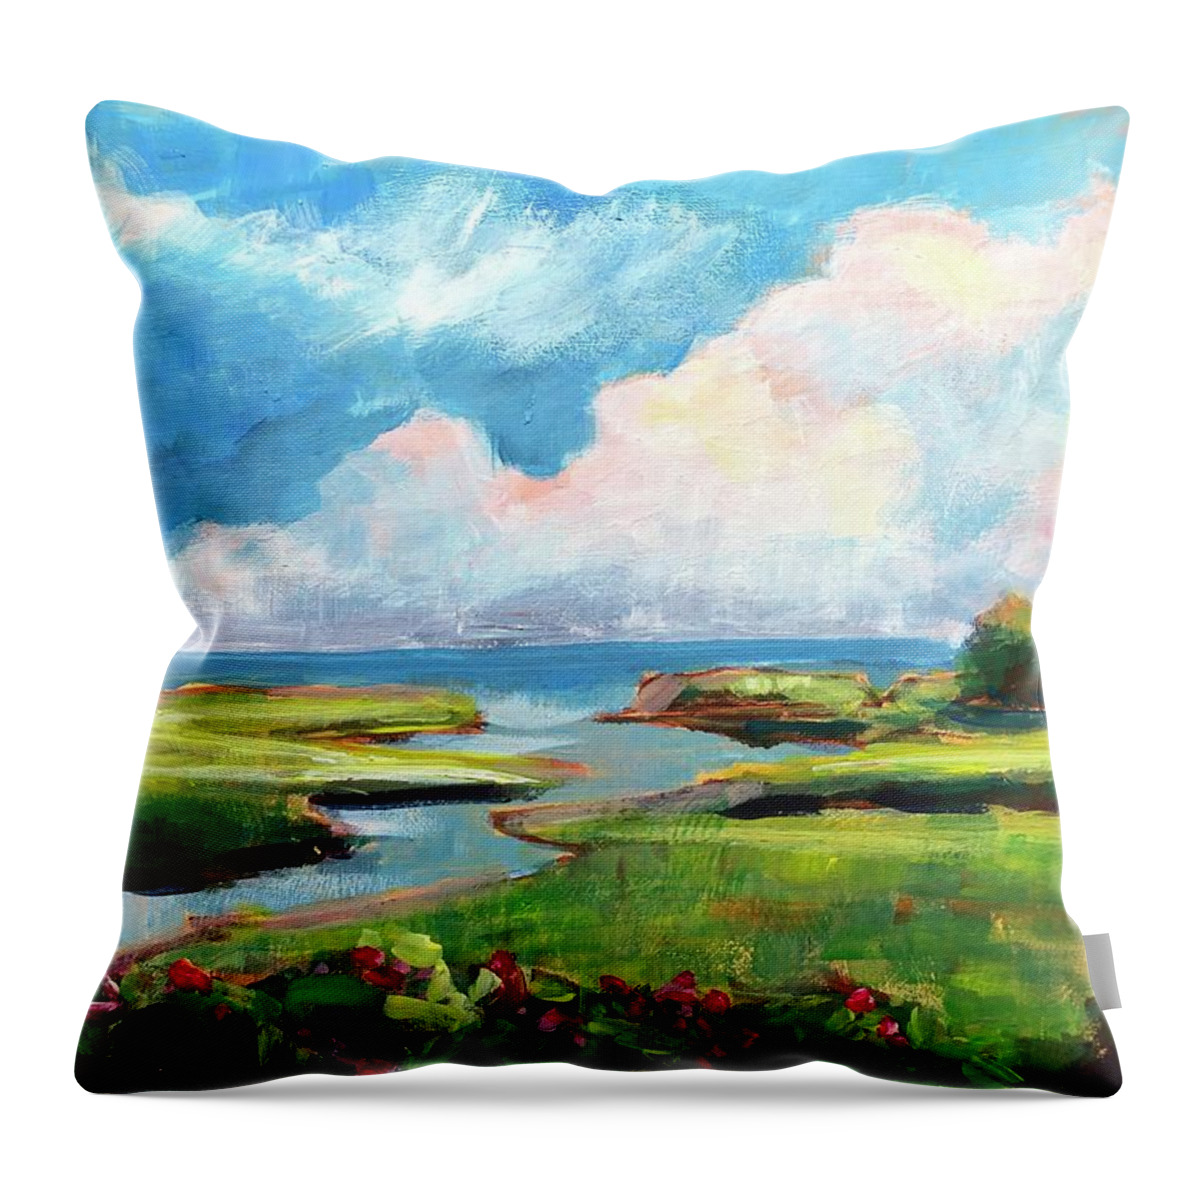 Seaside Marsh Throw Pillow featuring the painting Seaside Marsh by Barbara Hageman